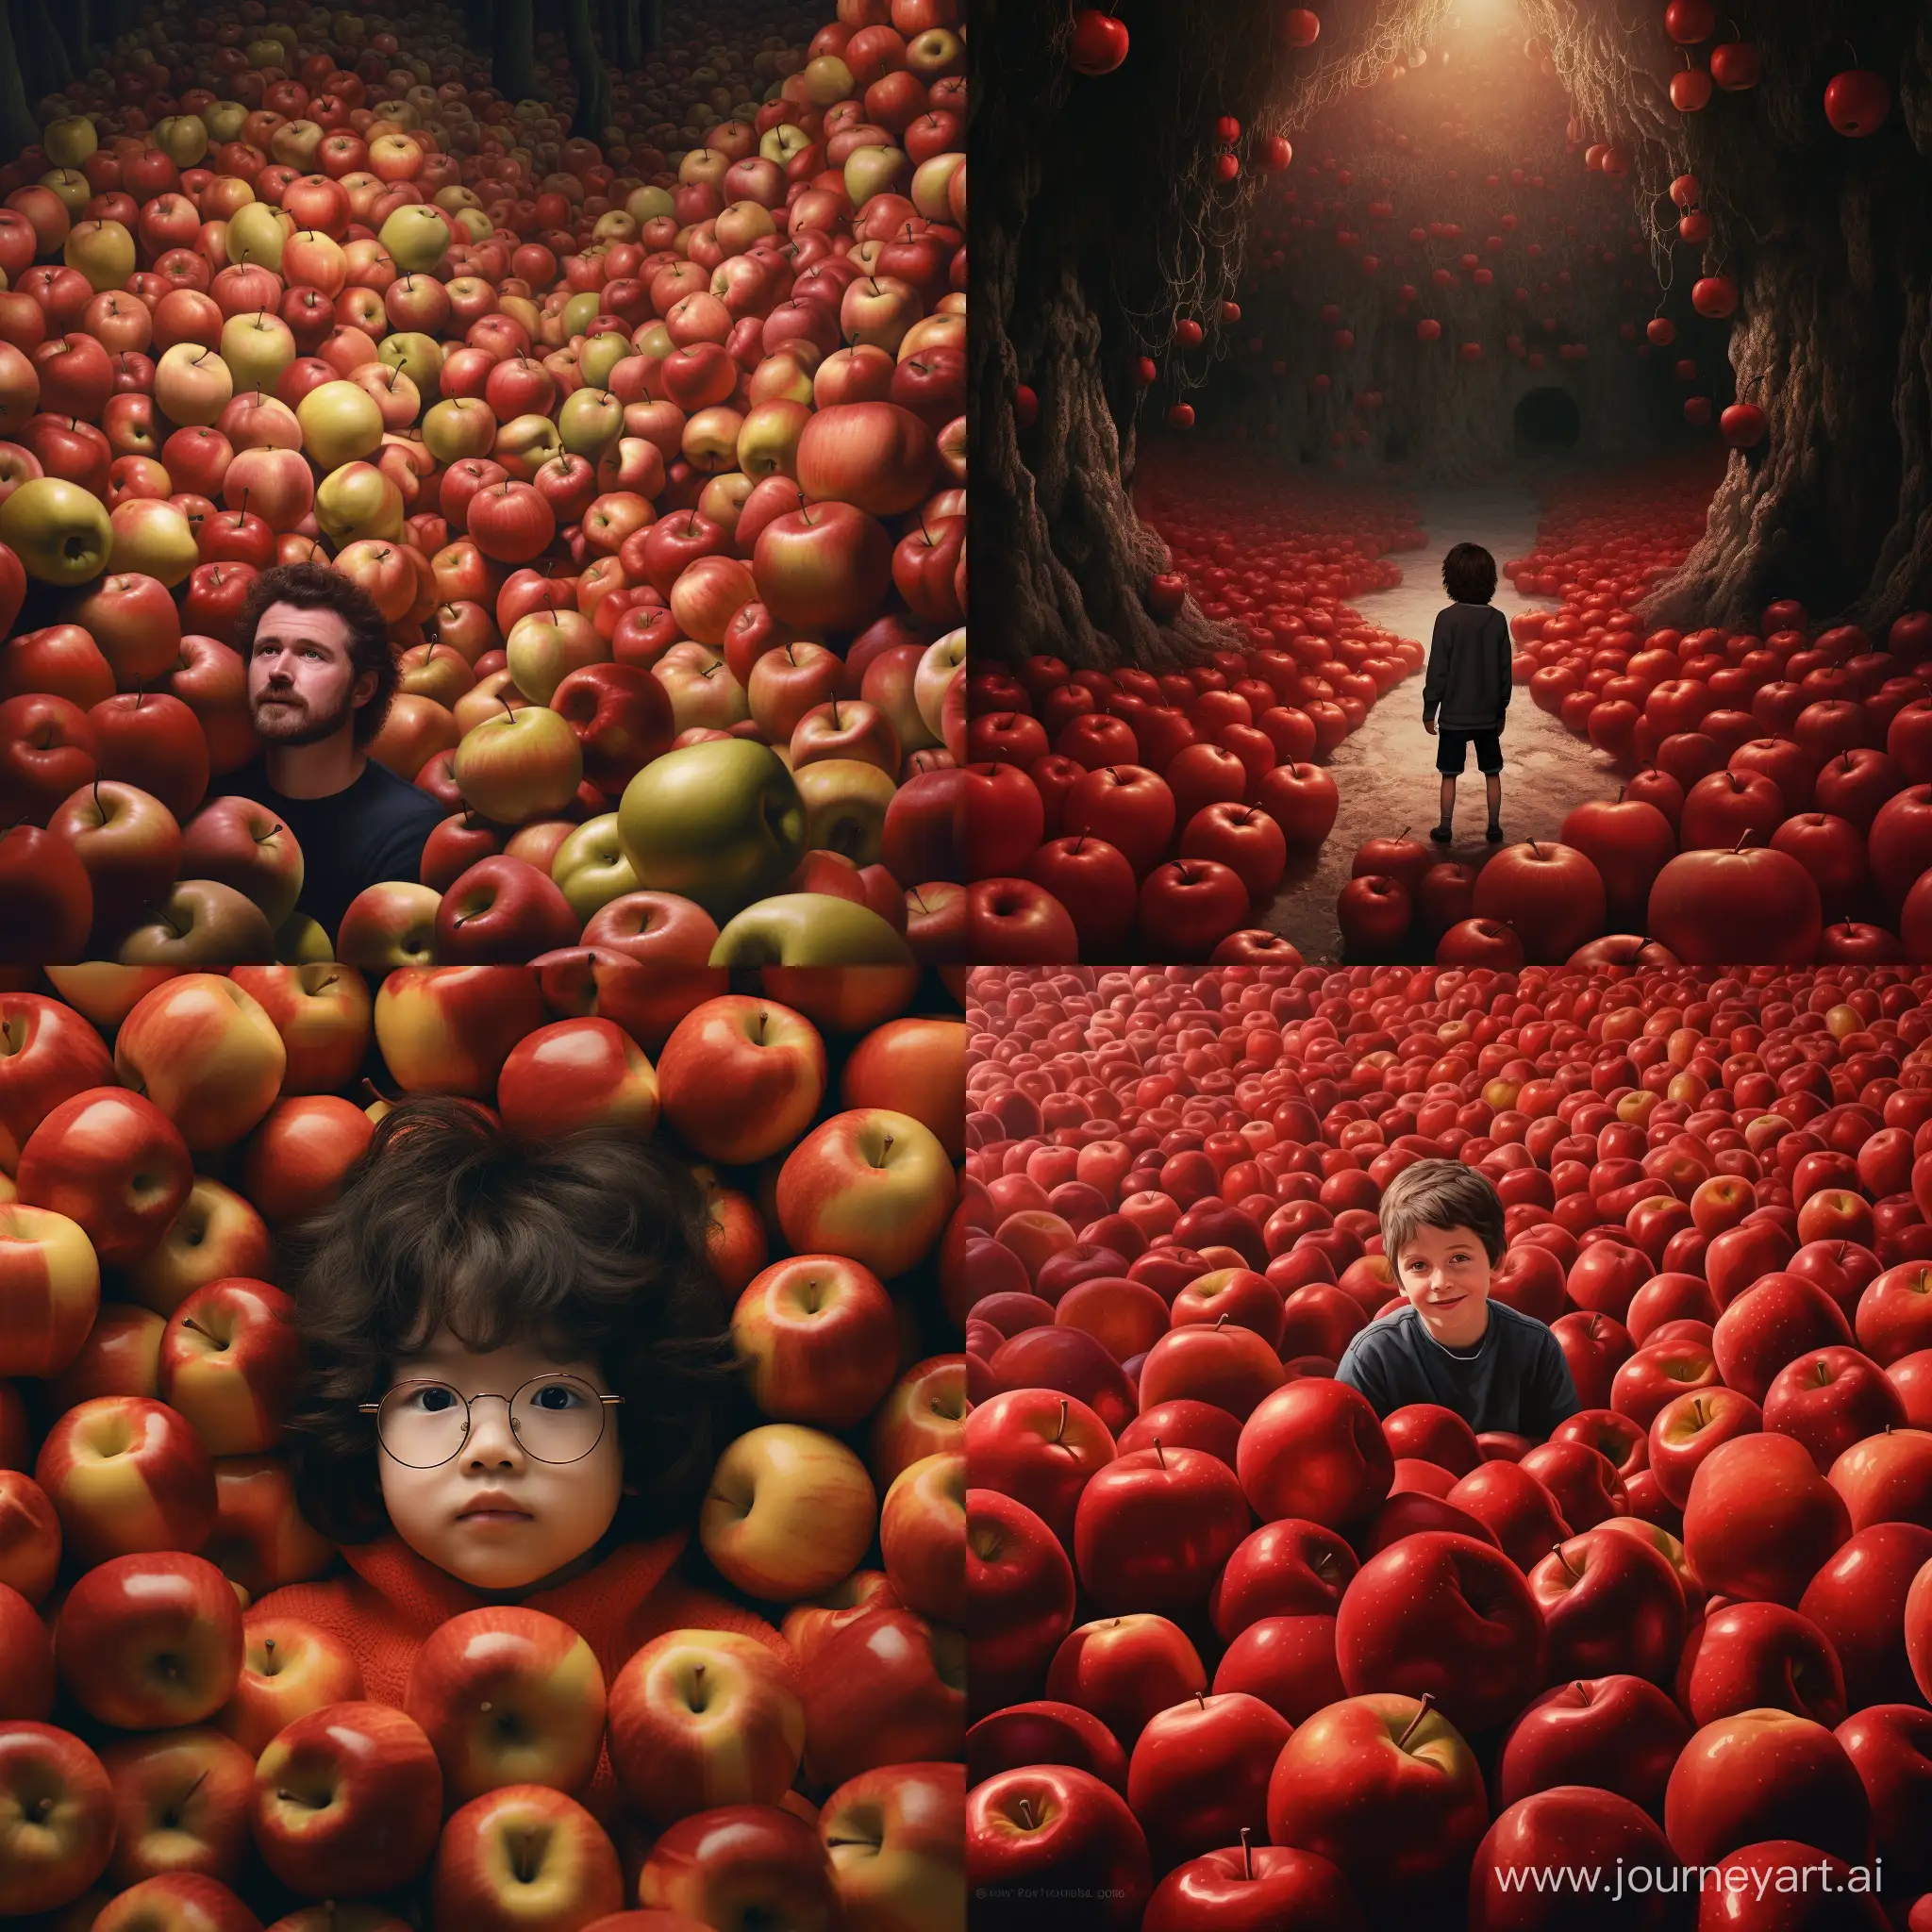 Miniature-Figure-Among-Giant-Apples-in-Stunning-Photorealistic-Scene